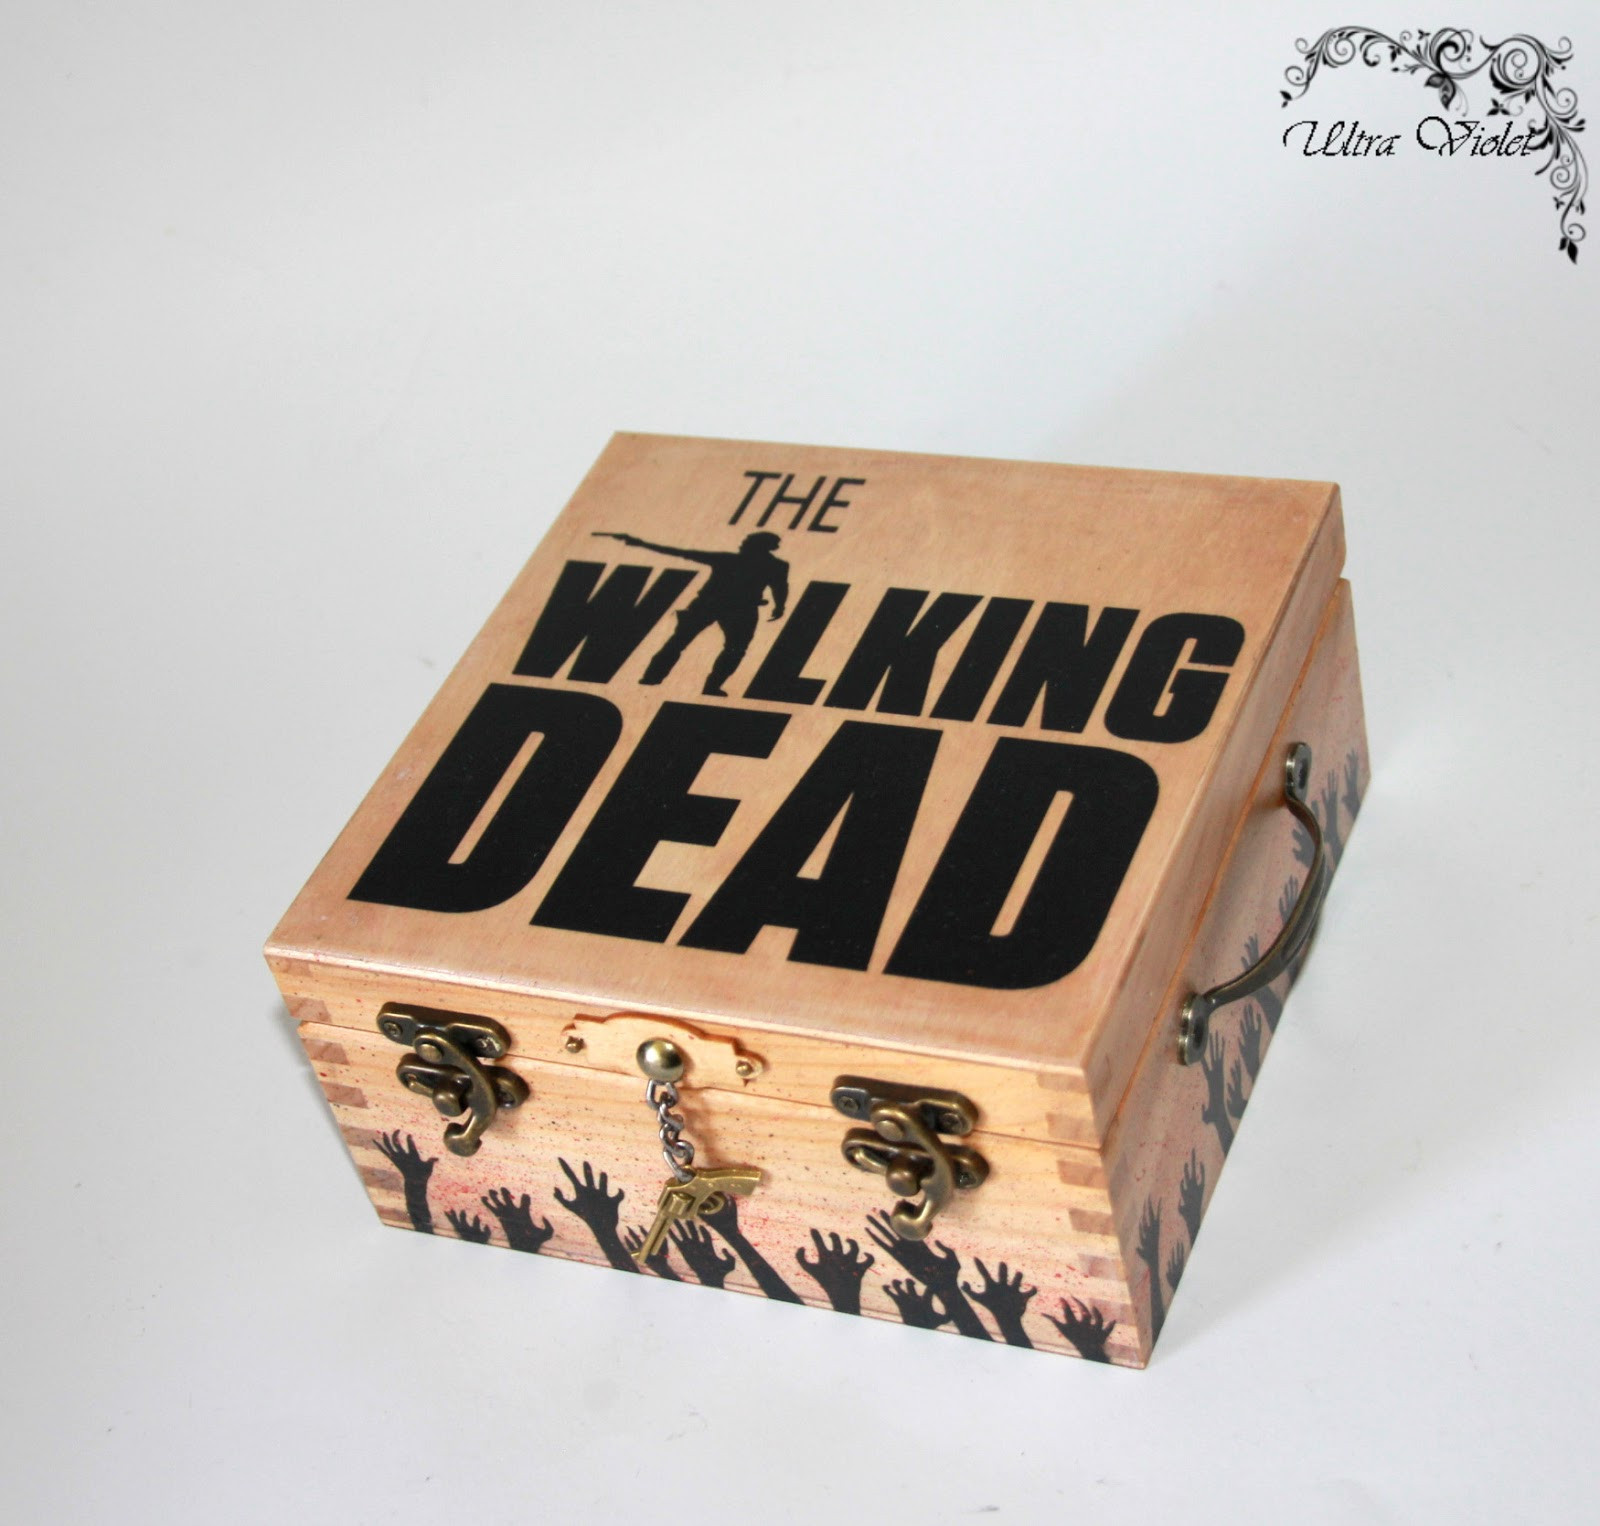 The Walking Dead Geschenke
 Ultra Violet Exklusive Geschenke Exklusive Teebox Tee